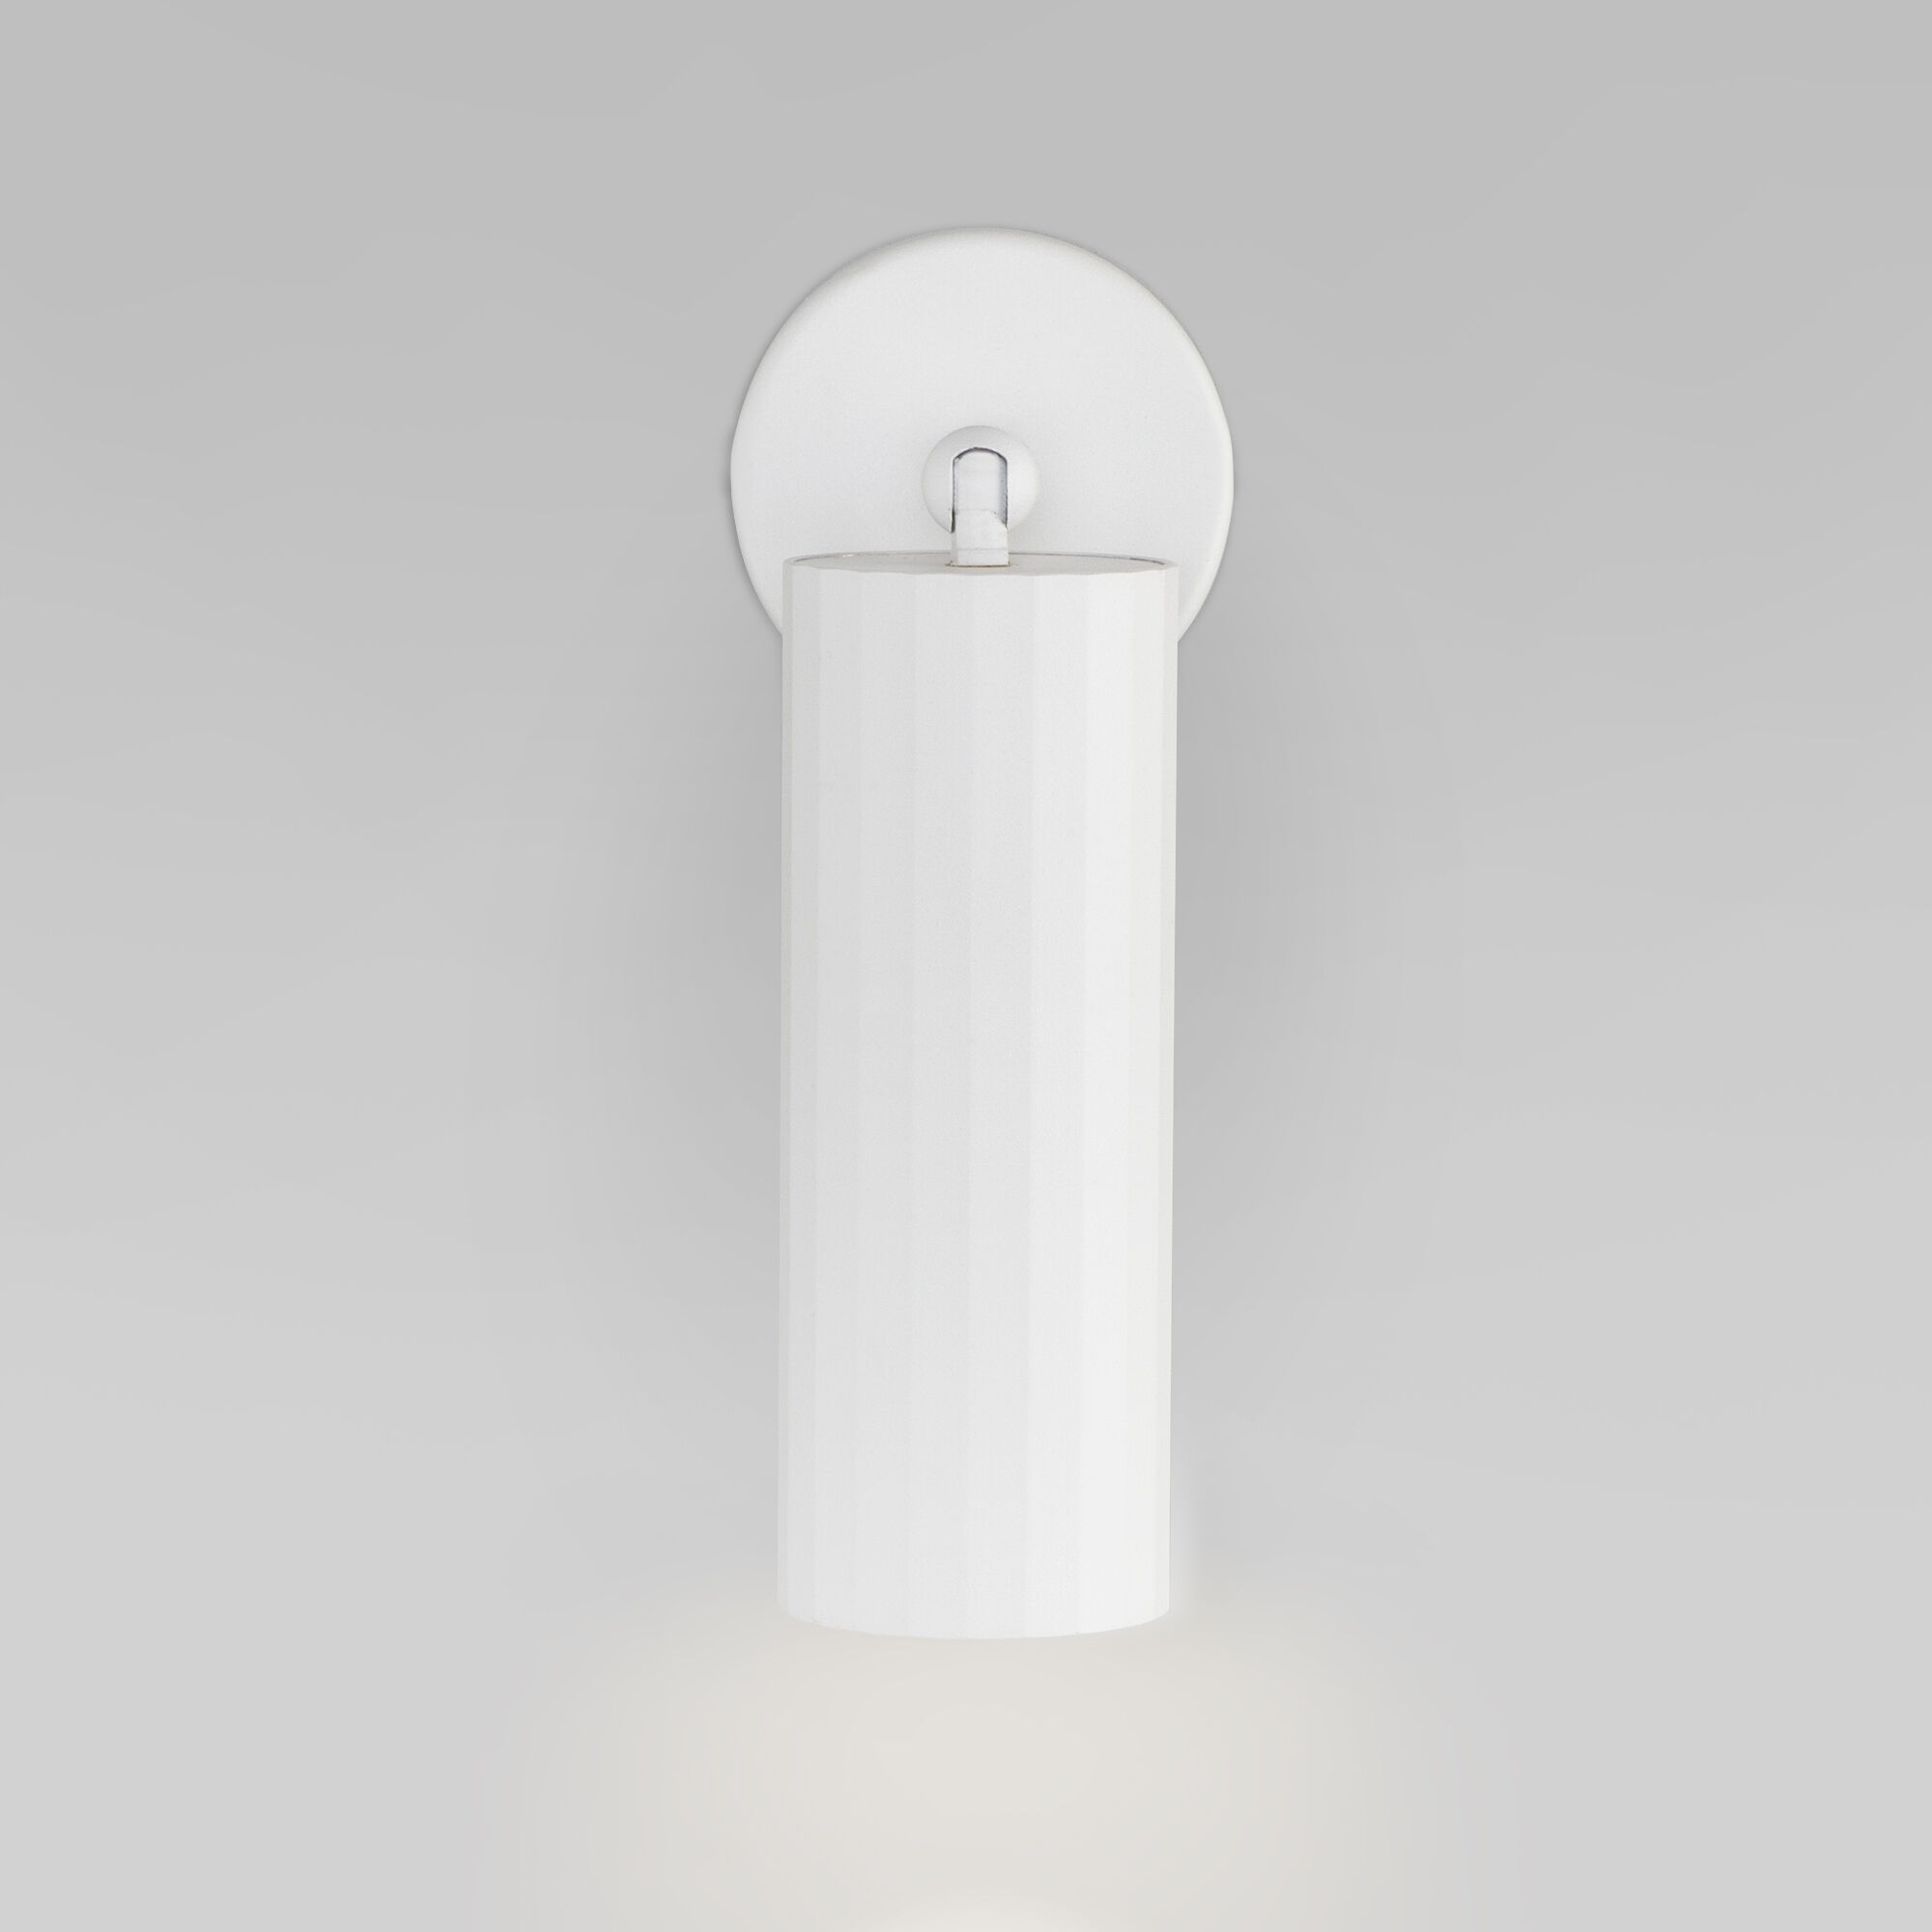 Настенный светильник Eurosvet 20098/1 LED белый